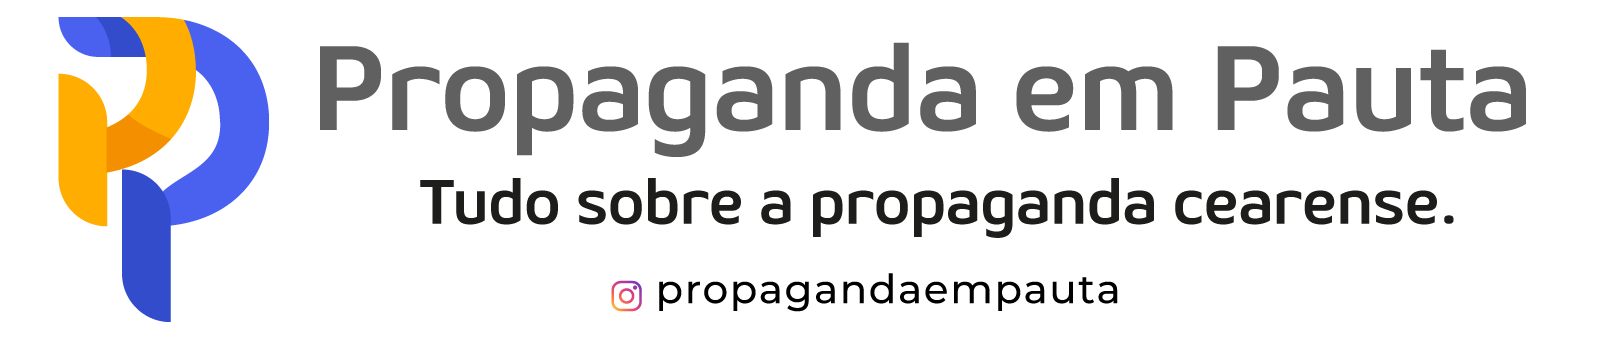 Banner - Propaganda em Pauta